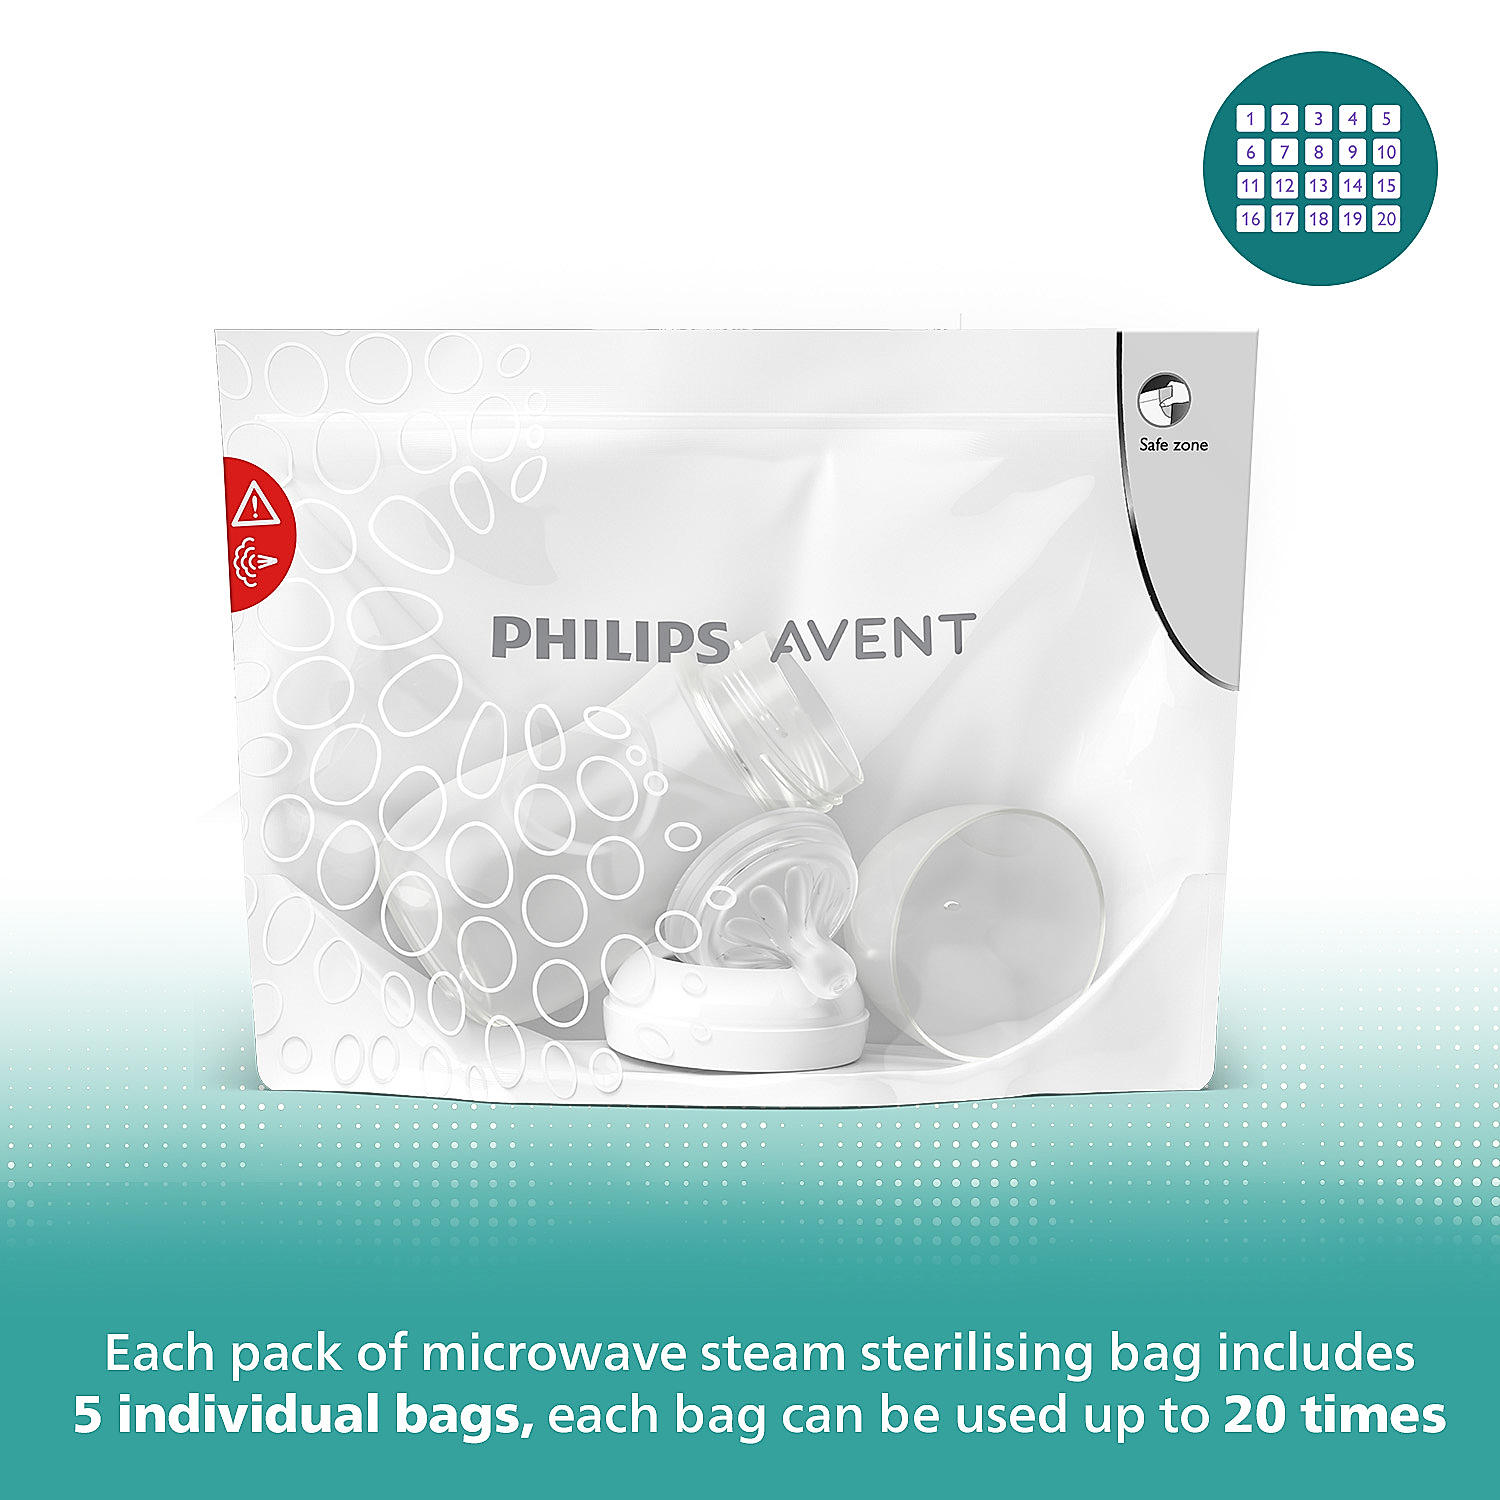 Buy Philips Avent Microwave E-shop Bag, Online Sterilizing at SCF297/05 Philips